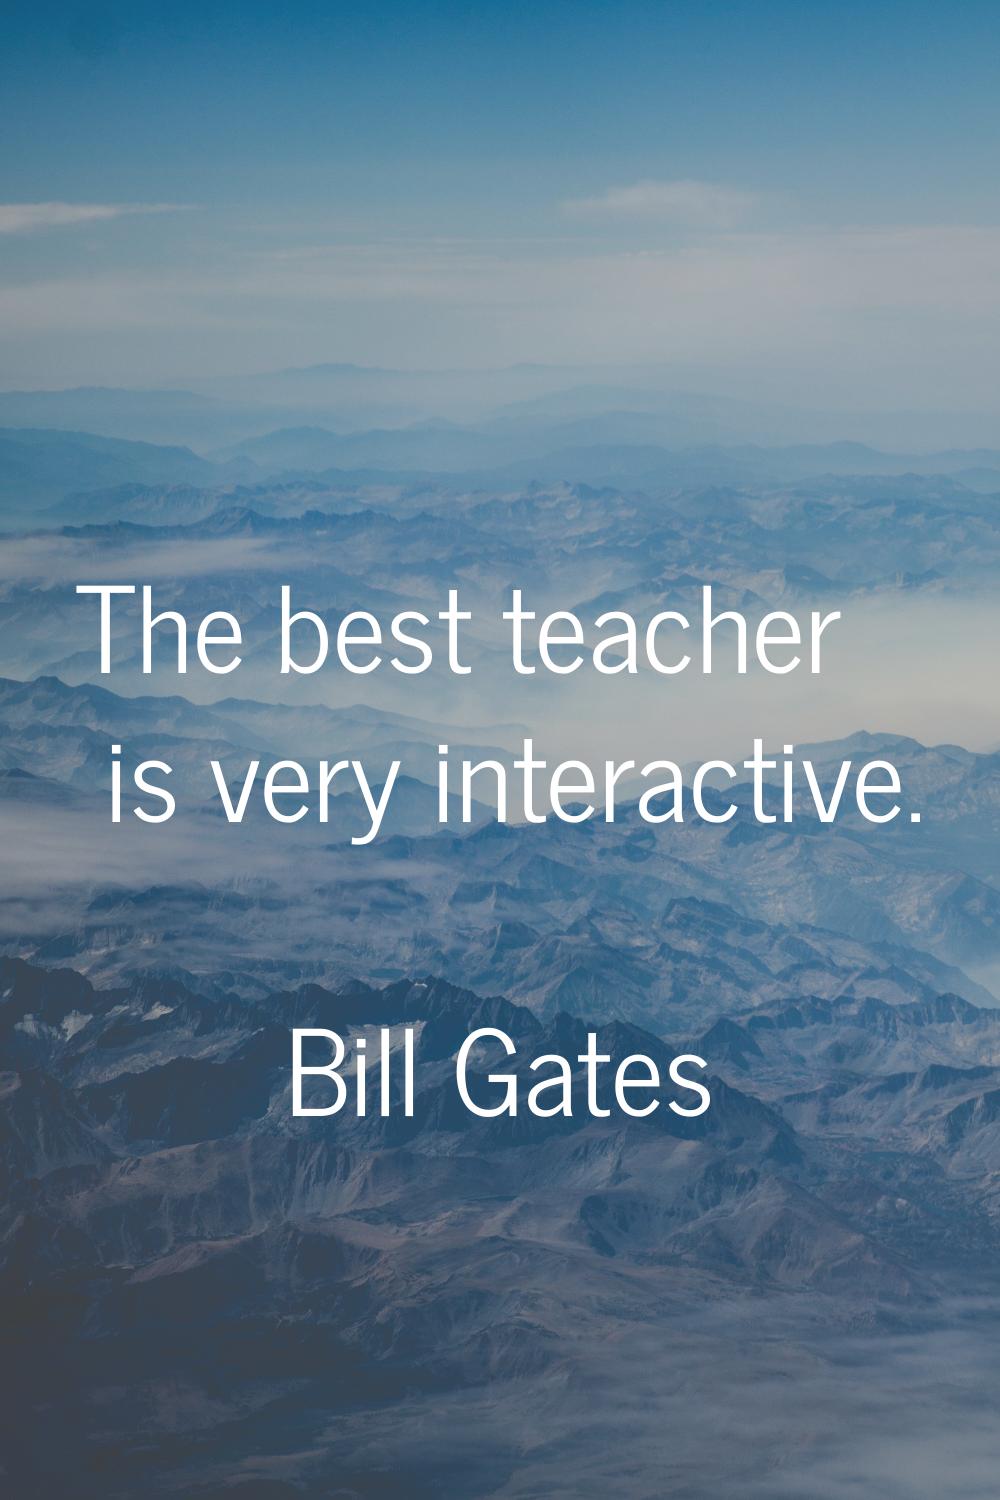 The best teacher is very interactive.